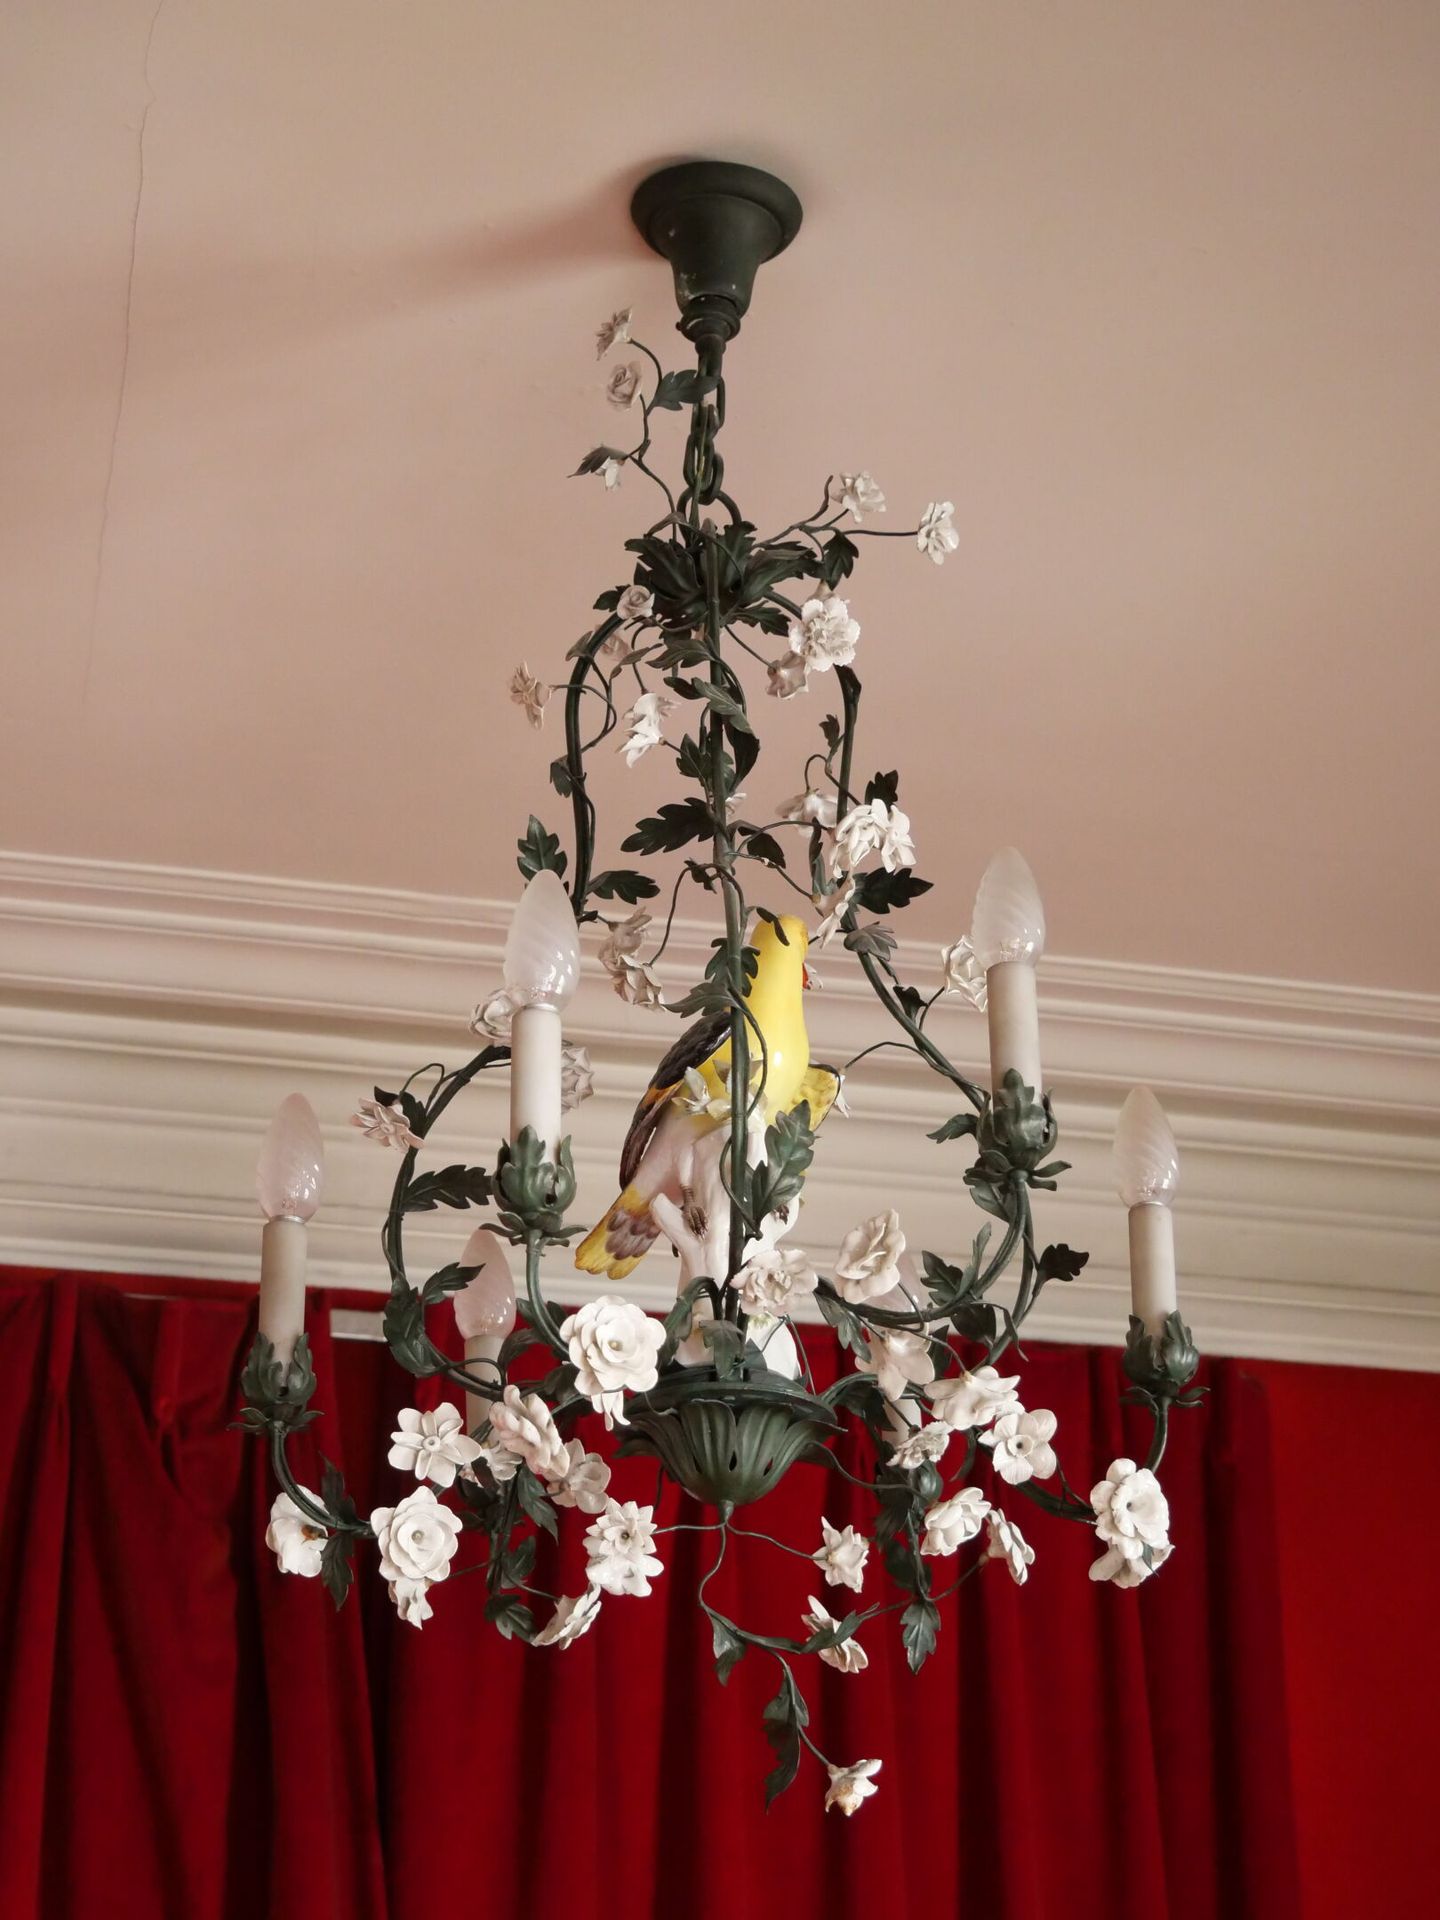 Null 绿色漆面金属的六灯吊灯，装饰有瓷器花朵。 中央部分有一只鸟栖息在树枝上。 
1900年以后。
尺寸：80 x 49厘米 

专家 : MB ART E&hellip;